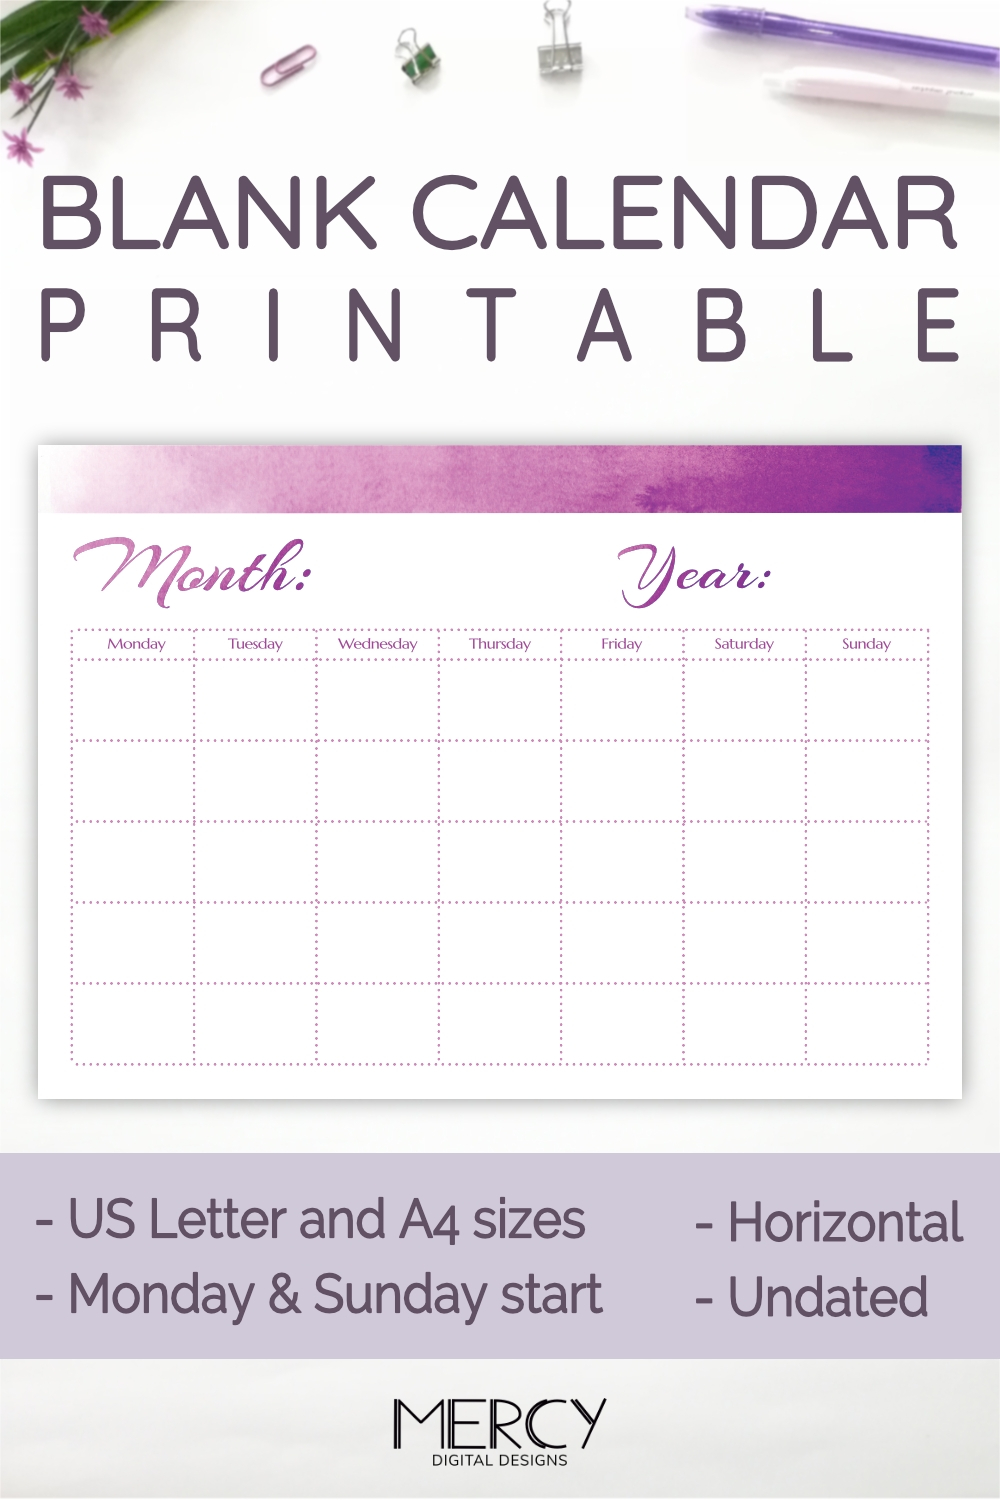 Blank Undated Calendar To Print | Ten Free Printable